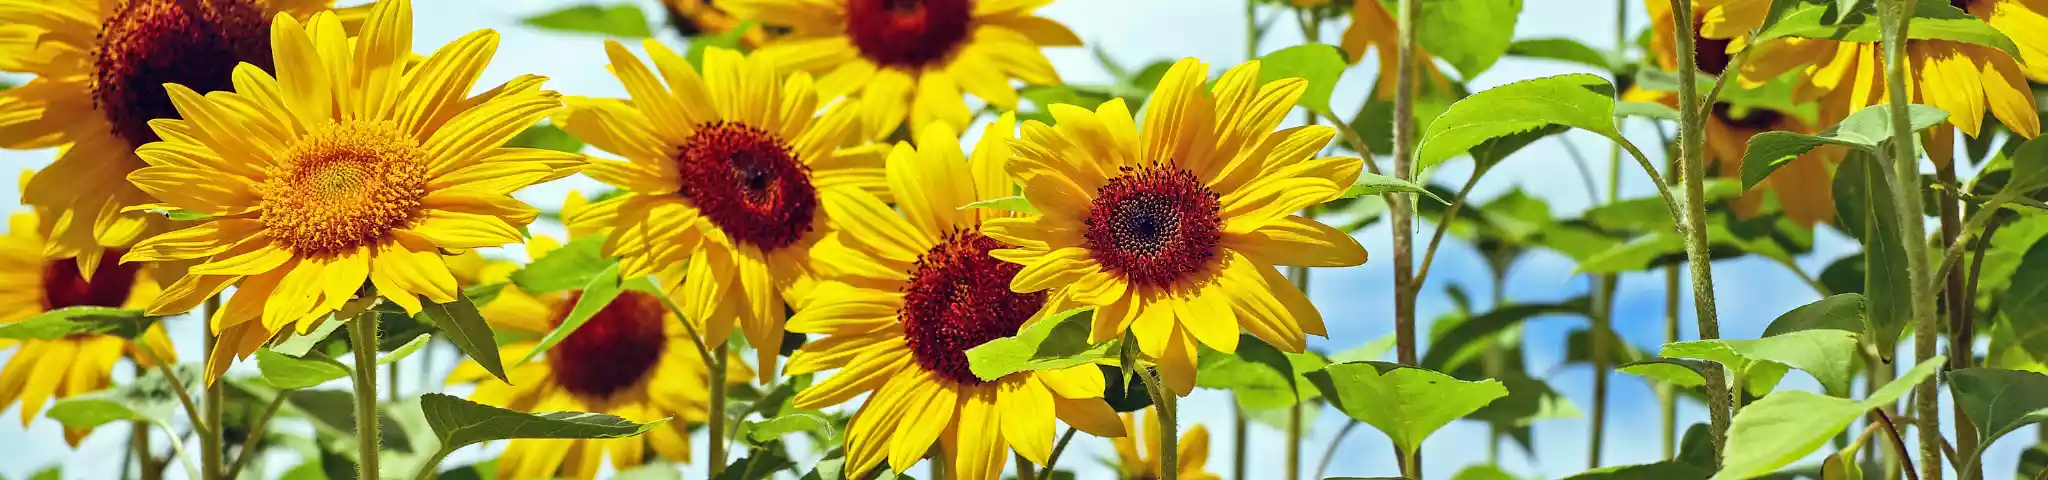 Sunflowers (ಸೂರ್ಯಕಾಂತಿ)